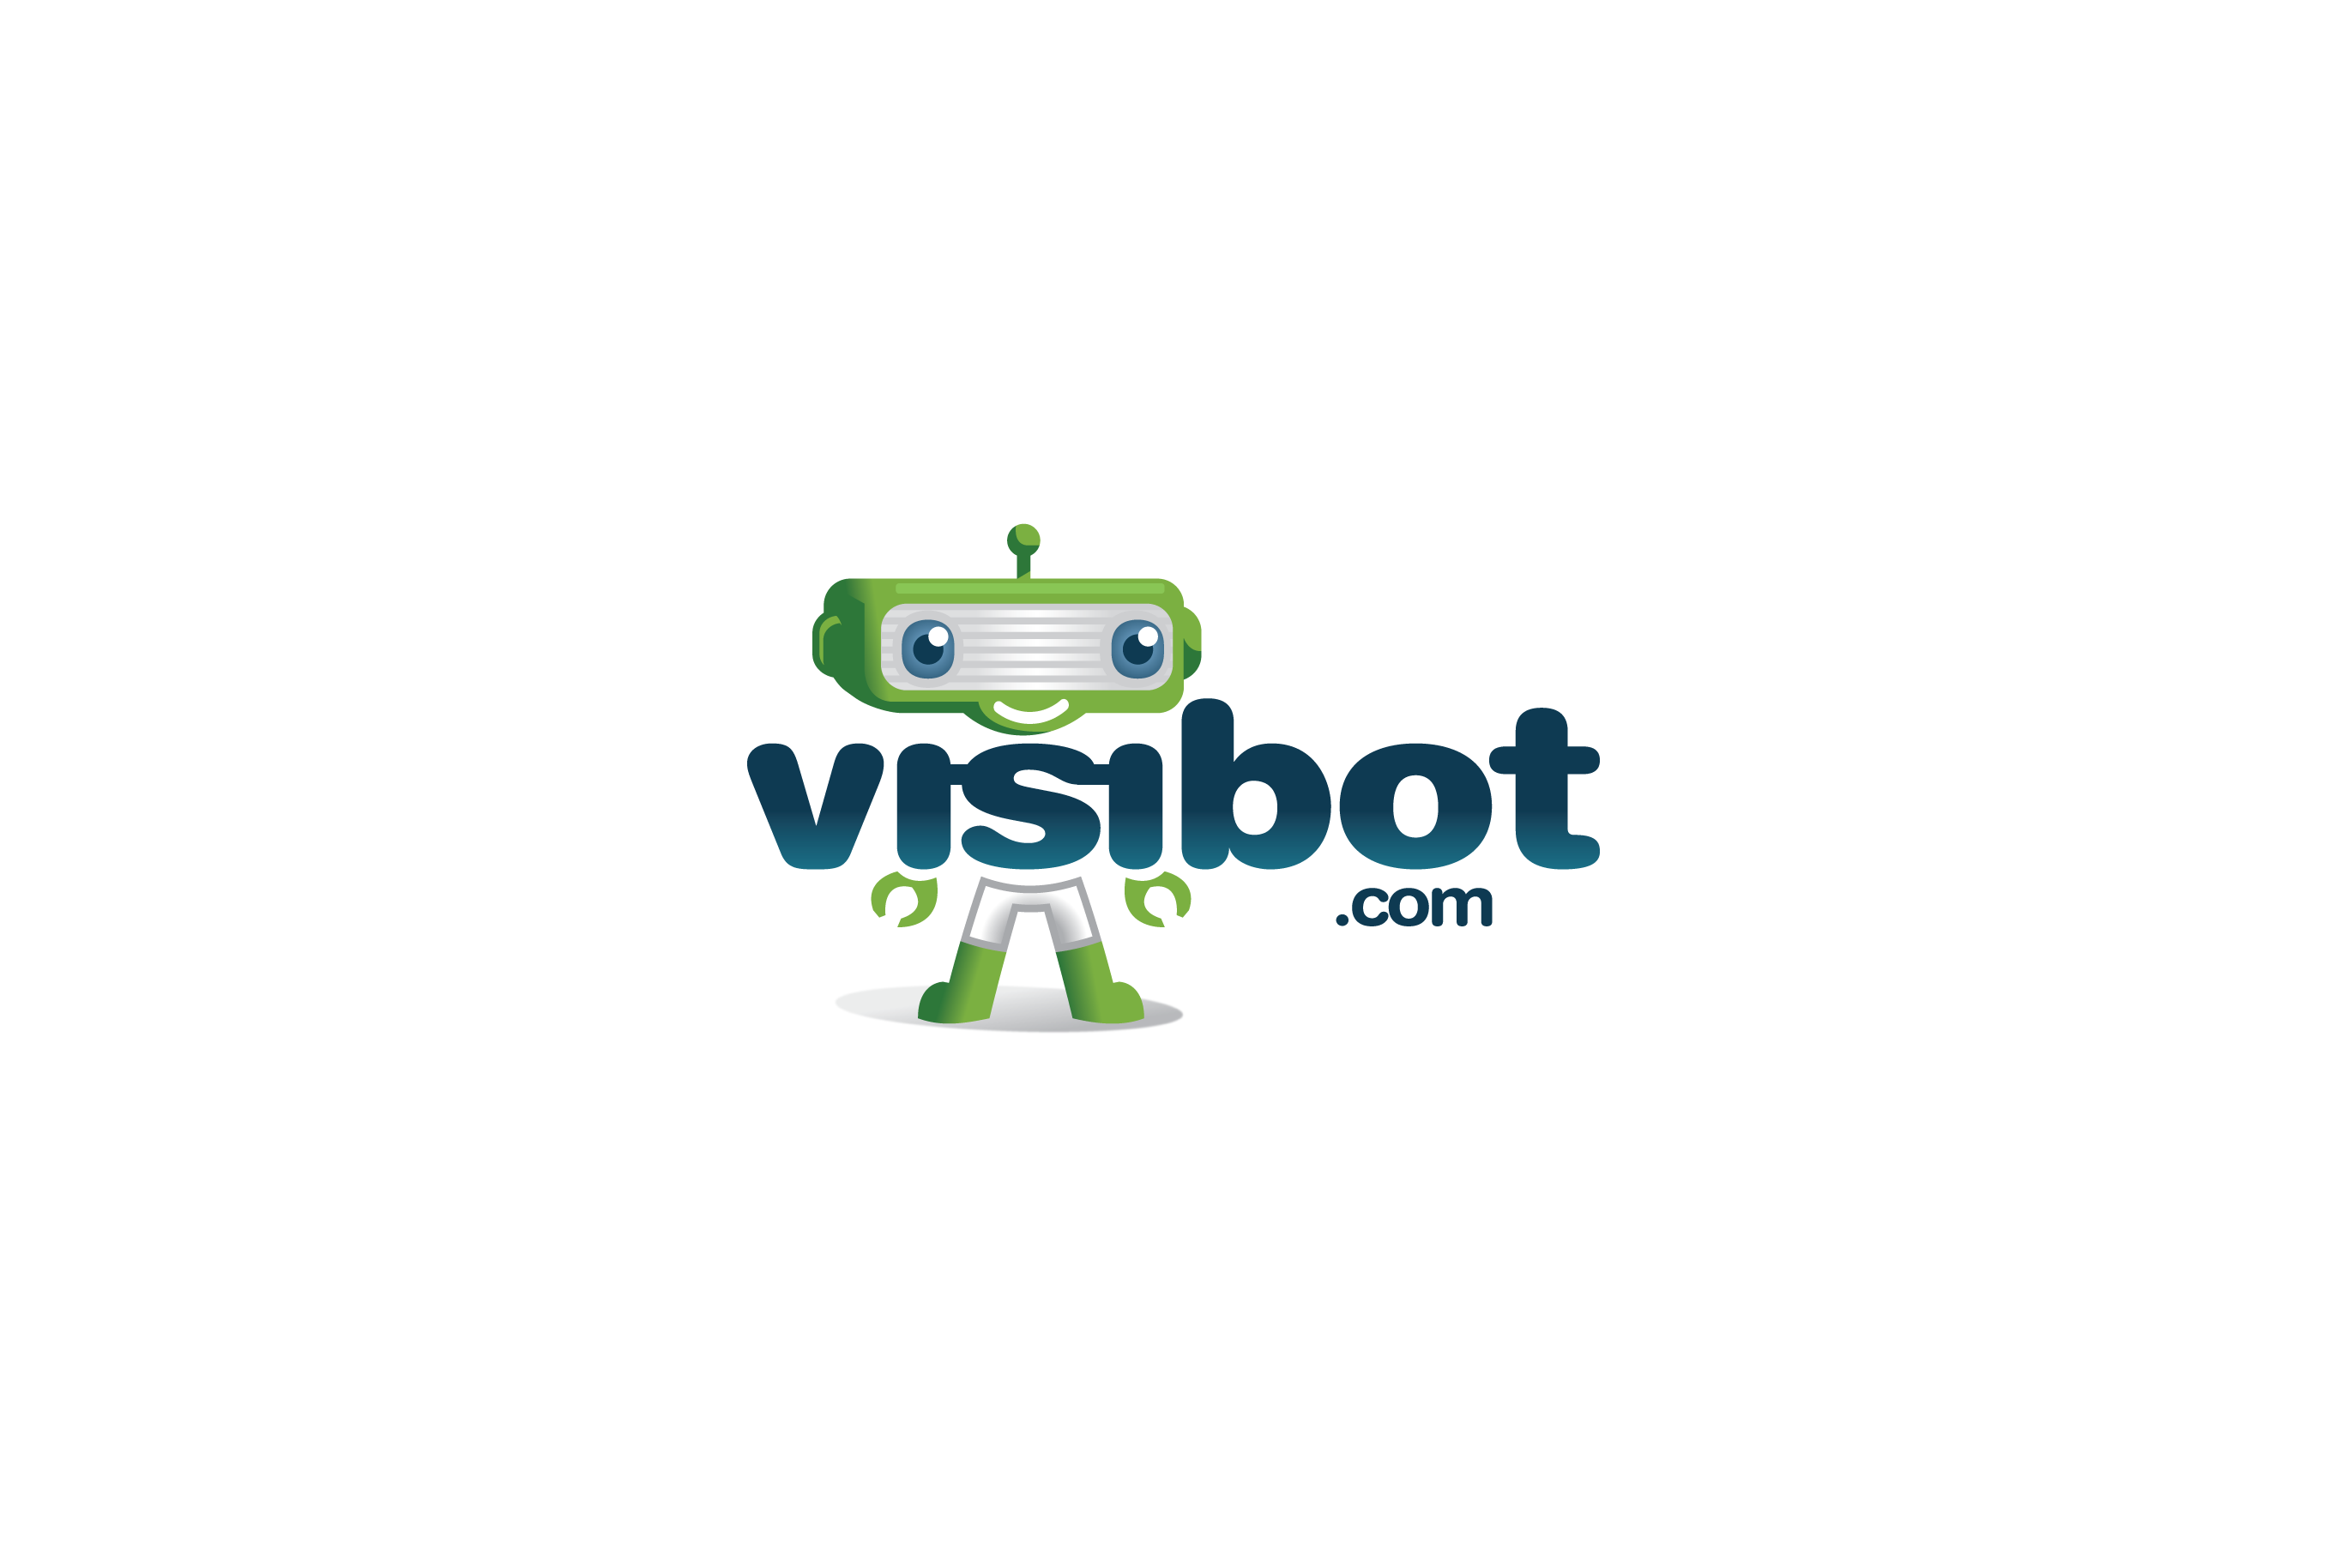 visibot robot logo design sold out logo cowboy 32169